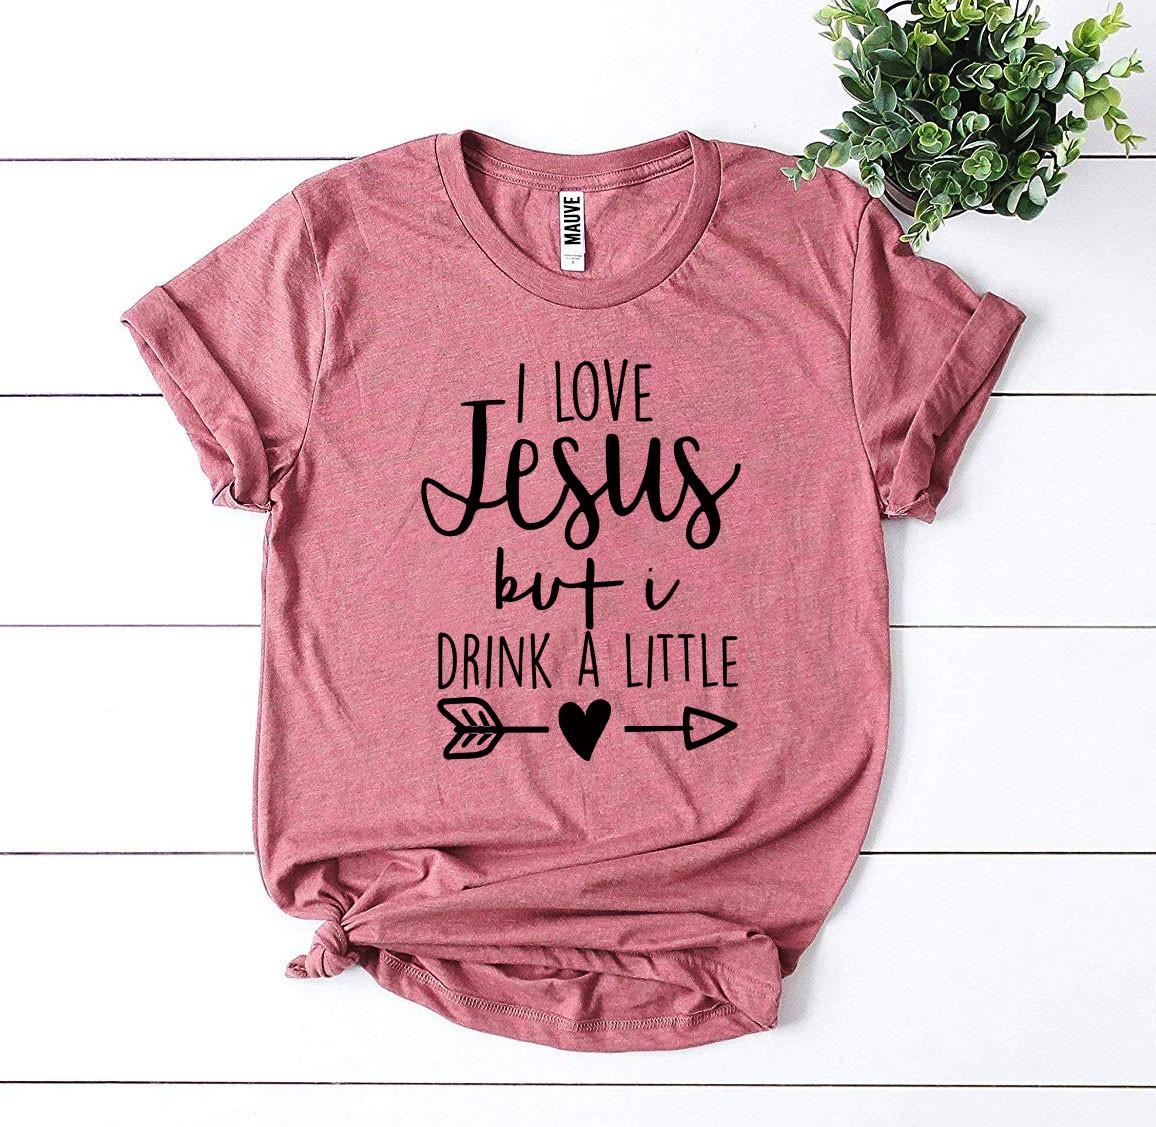 I Love Jesus But I Drink a Little T-shirt